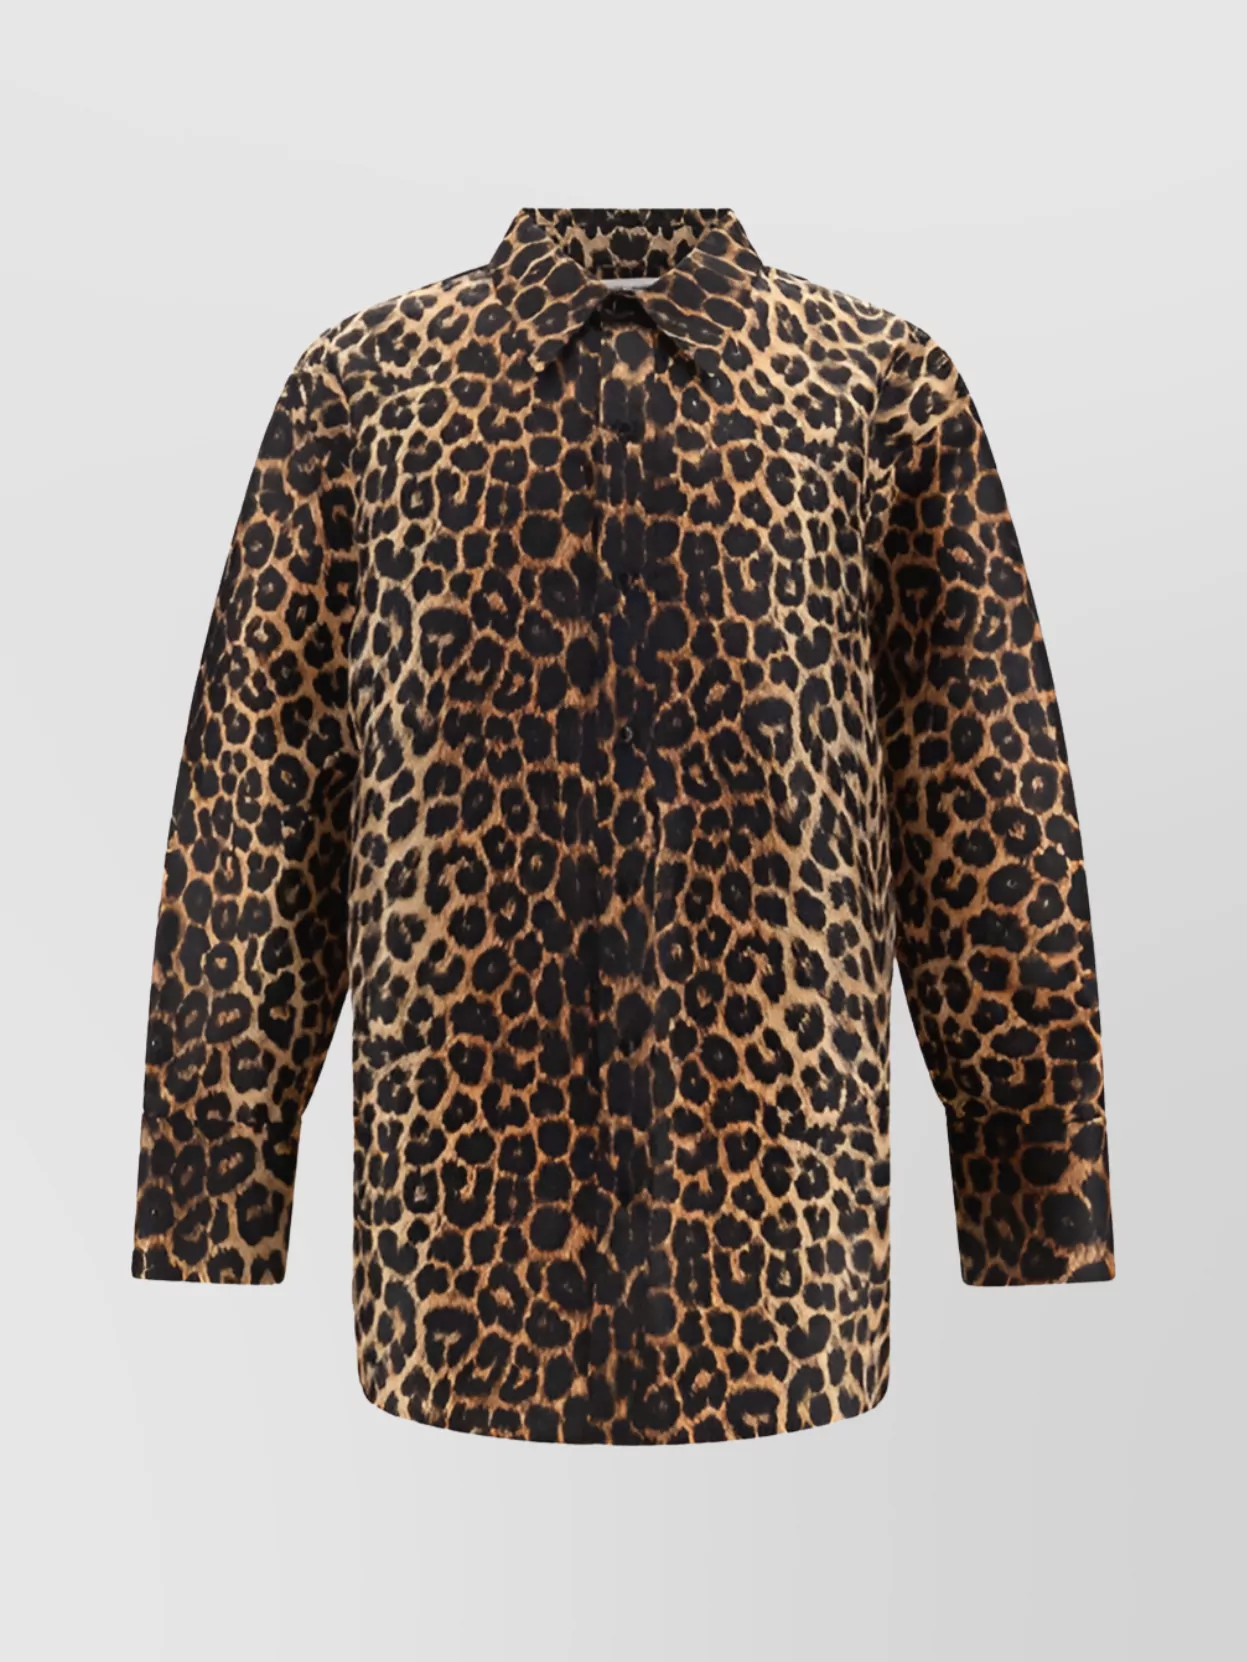 Saint Laurent Leopard Print Oversized Shirt In Animal Print